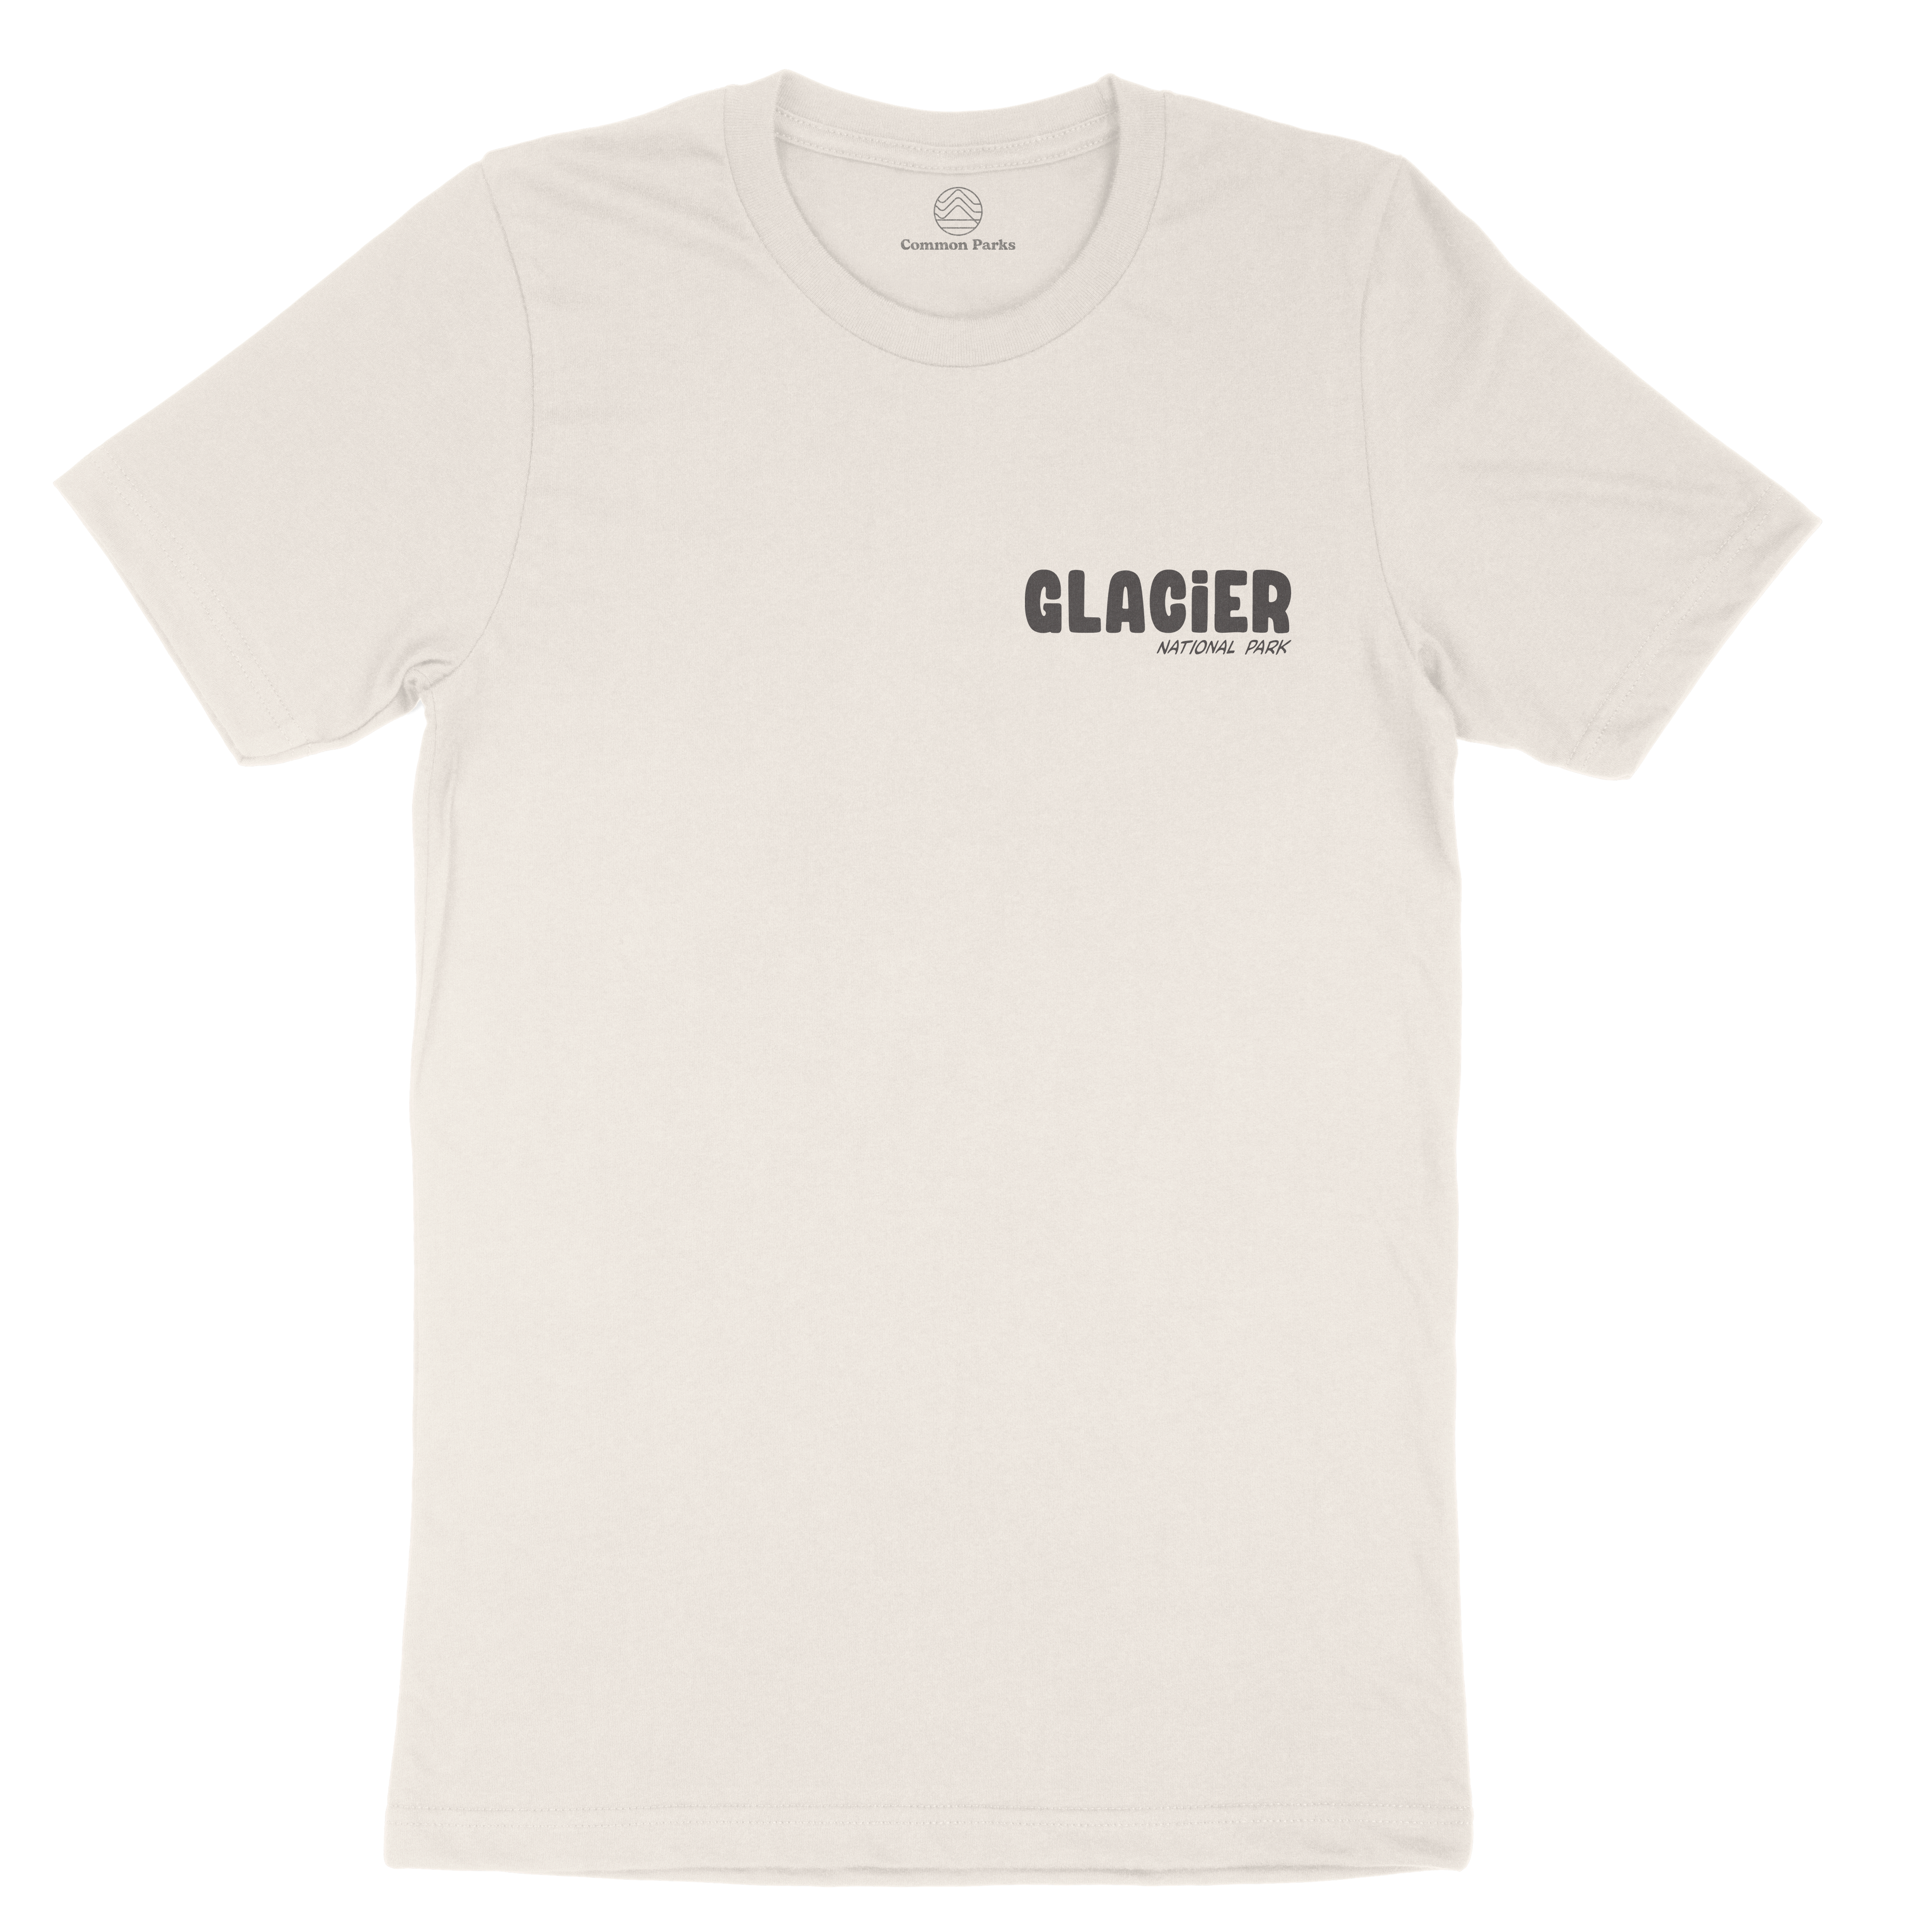 Glacier T-Shirt - Bold